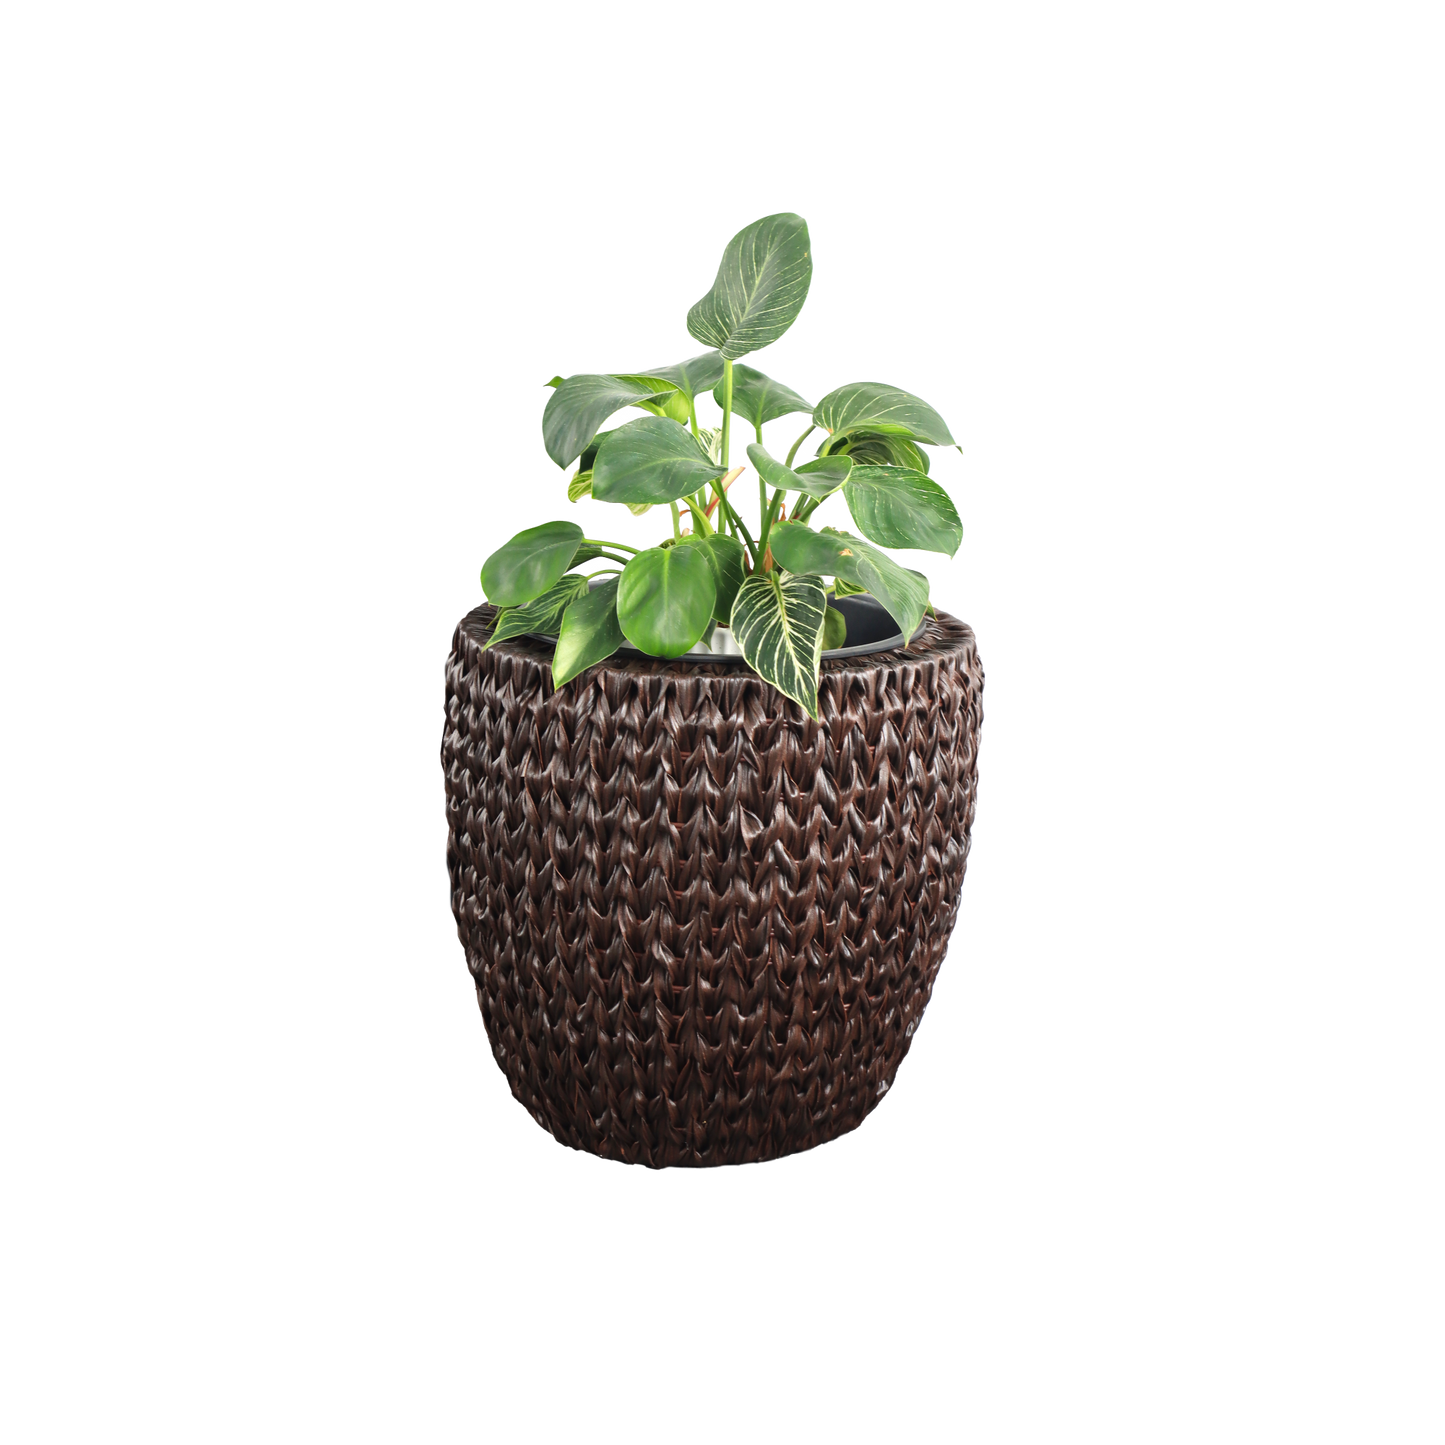 Eden Grace Set Of 2 Round All-Weather Wicker Planter With Plastic Liner Pot -Indoor / Outdoors Patio Herb Garden Furnishings